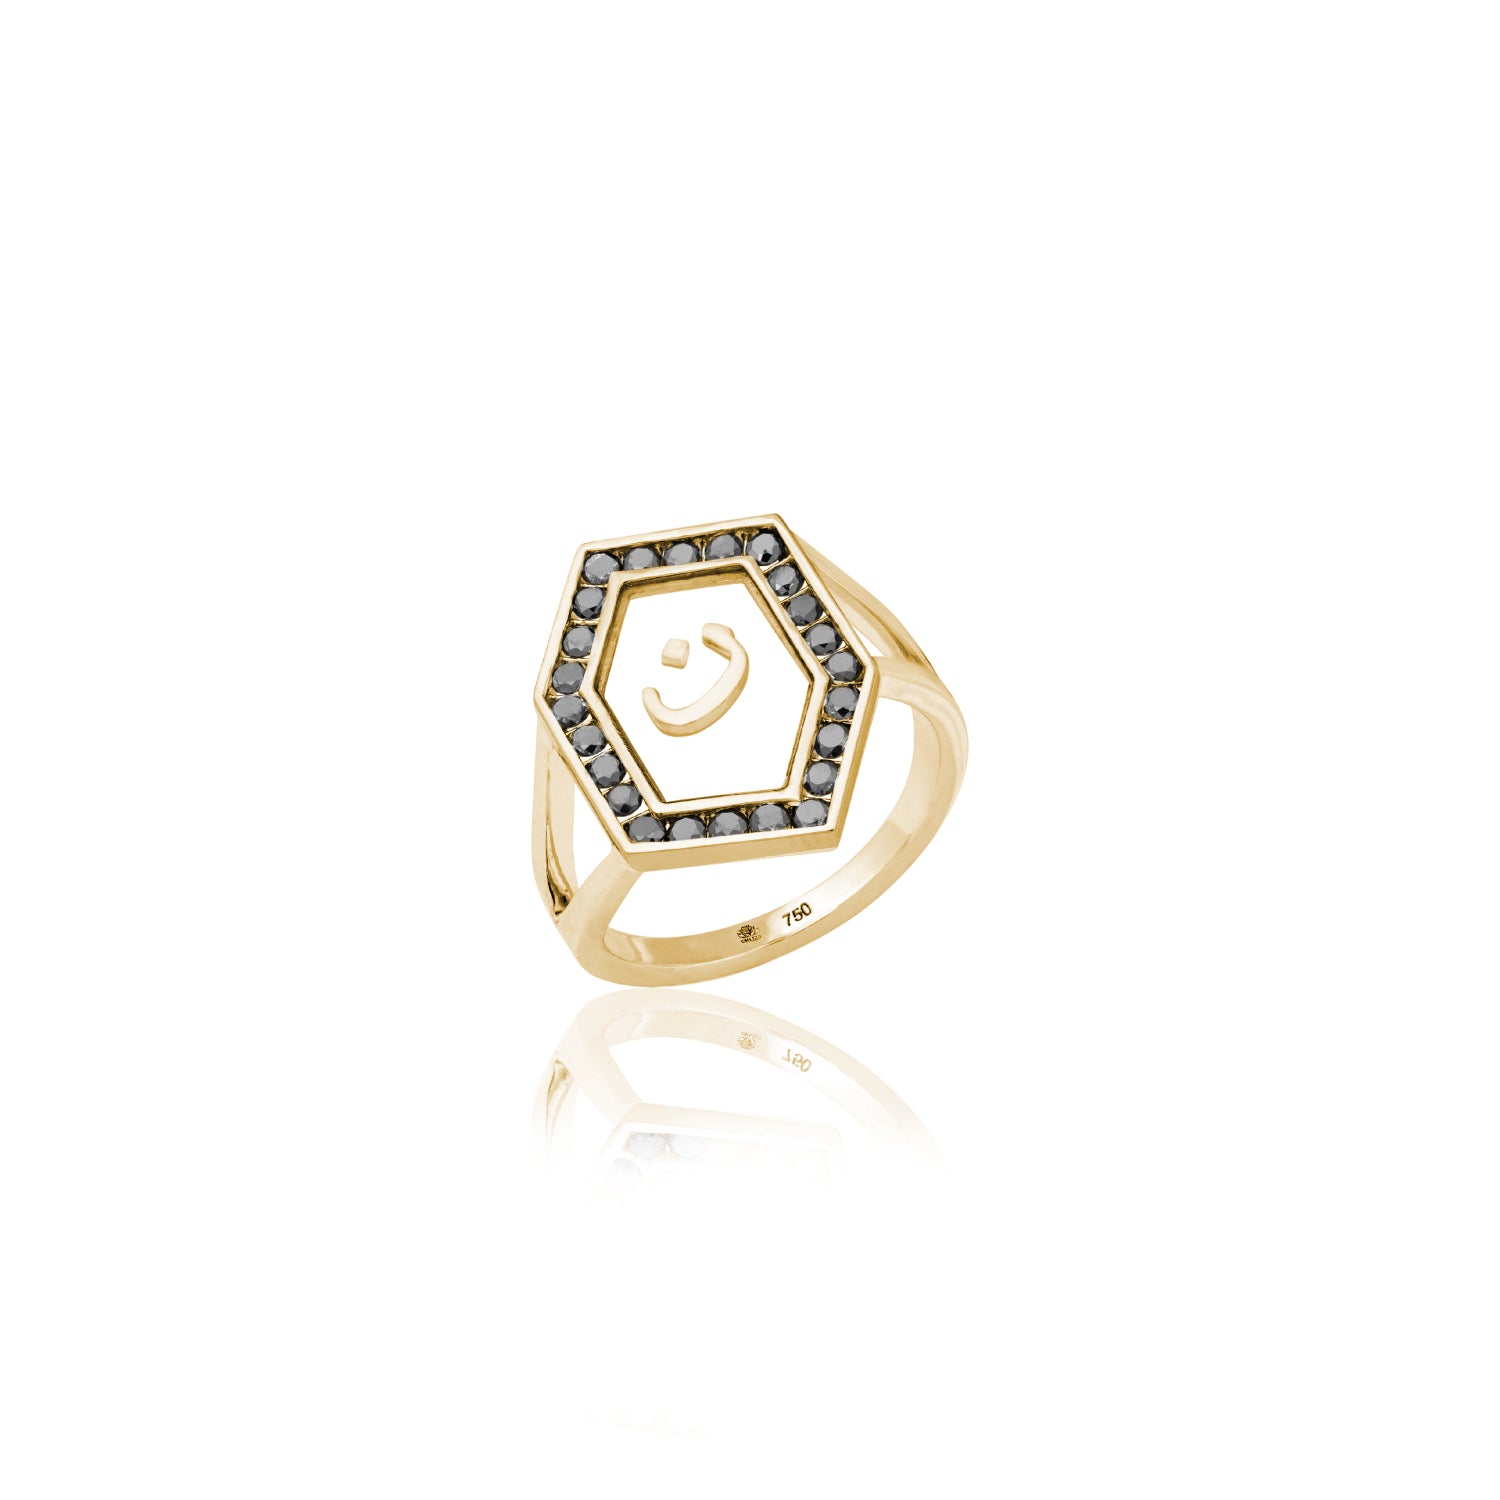 Qamoos 1.0 Letter ن Black Diamond Ring in Yellow Gold